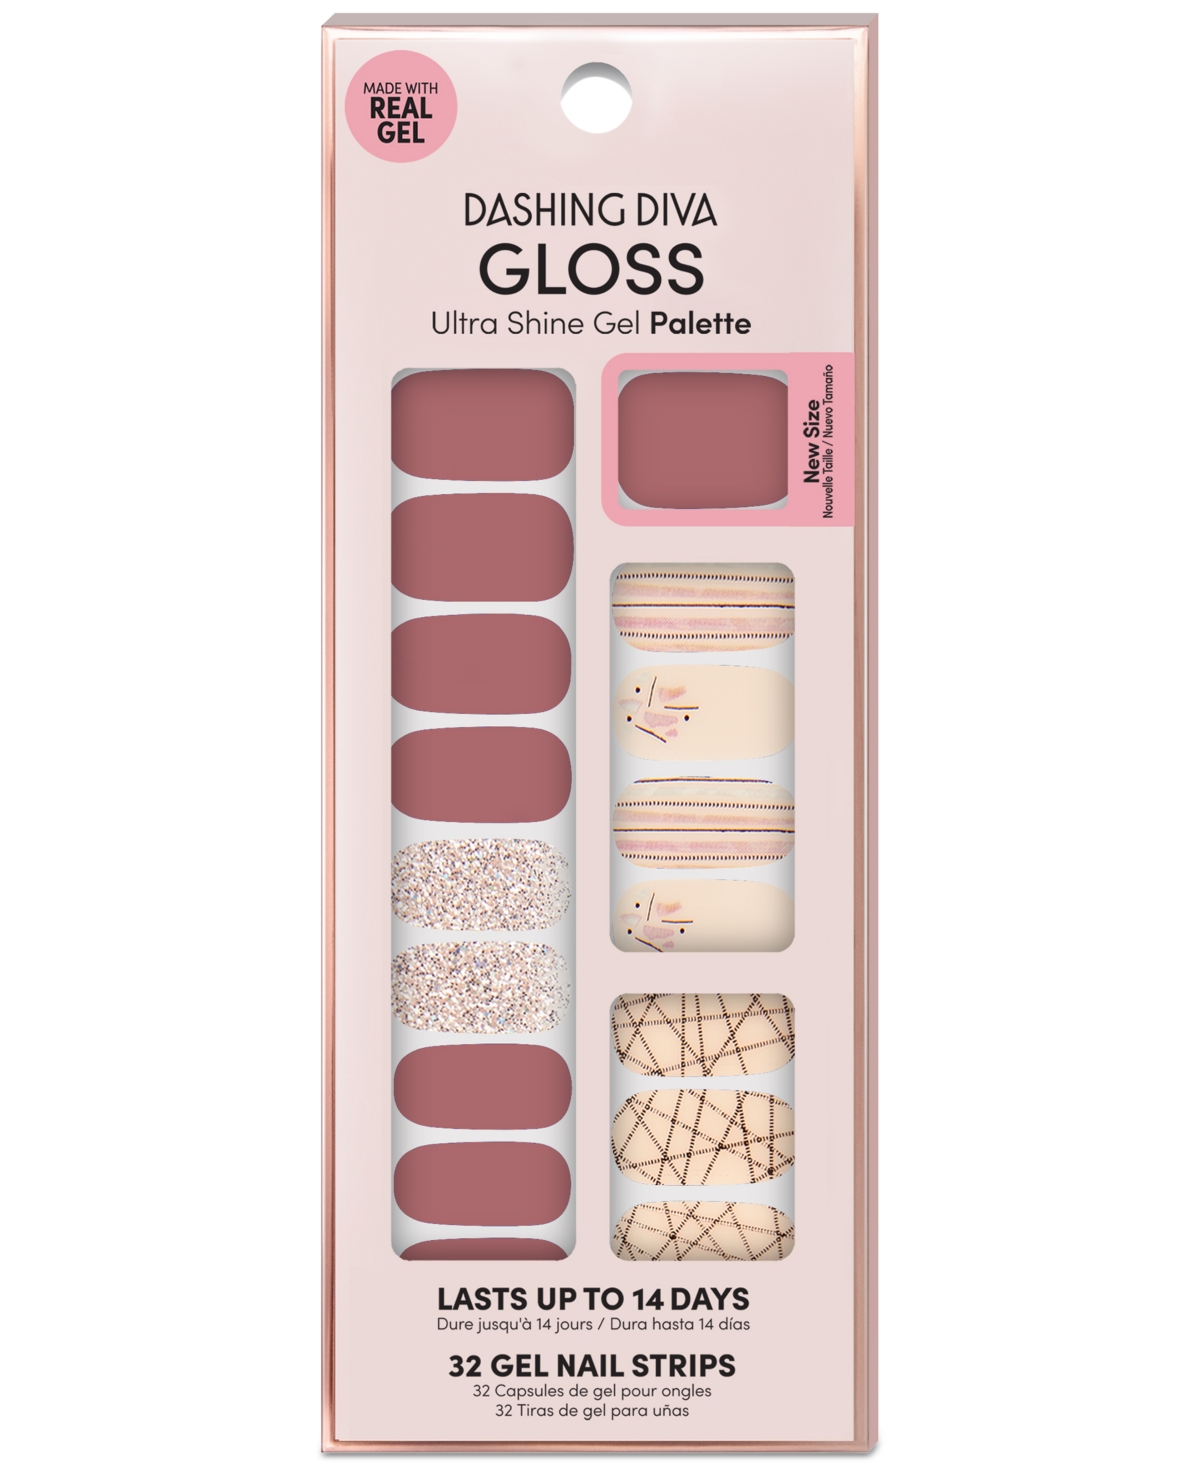 Dashing Diva Gloss Ultra Shine Gel Palette - Inside Edition